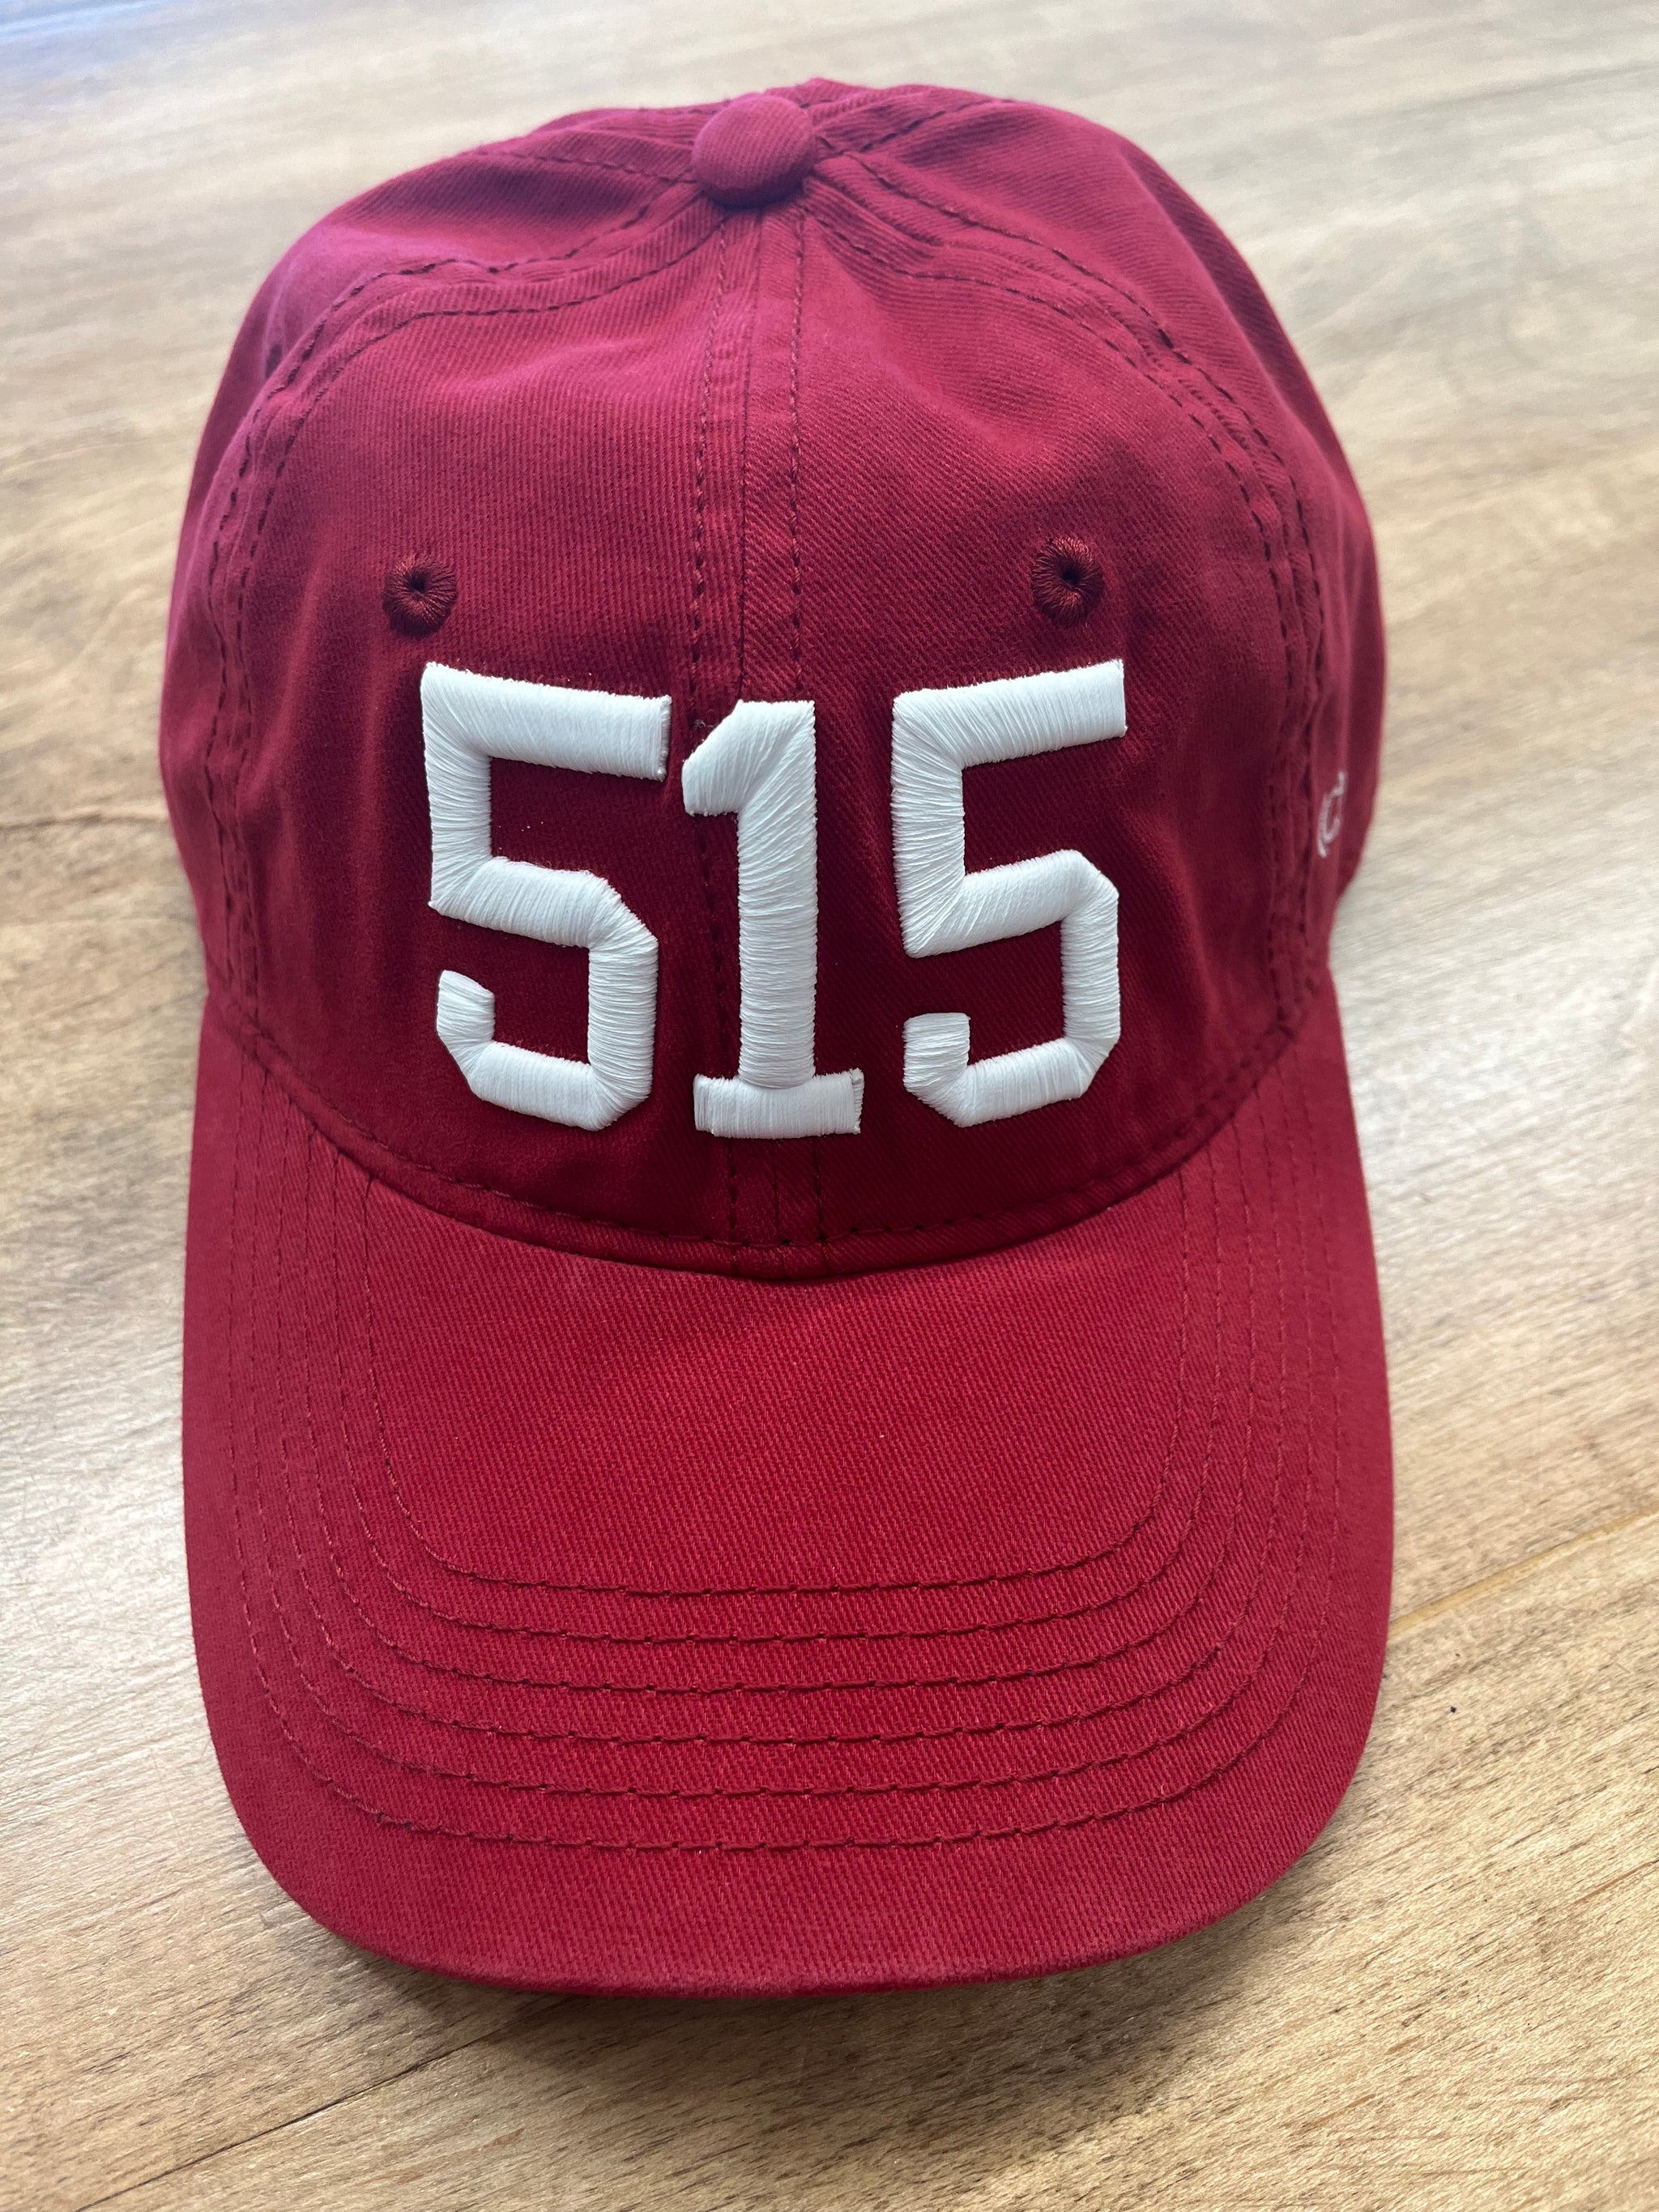 515 Codeword Hat